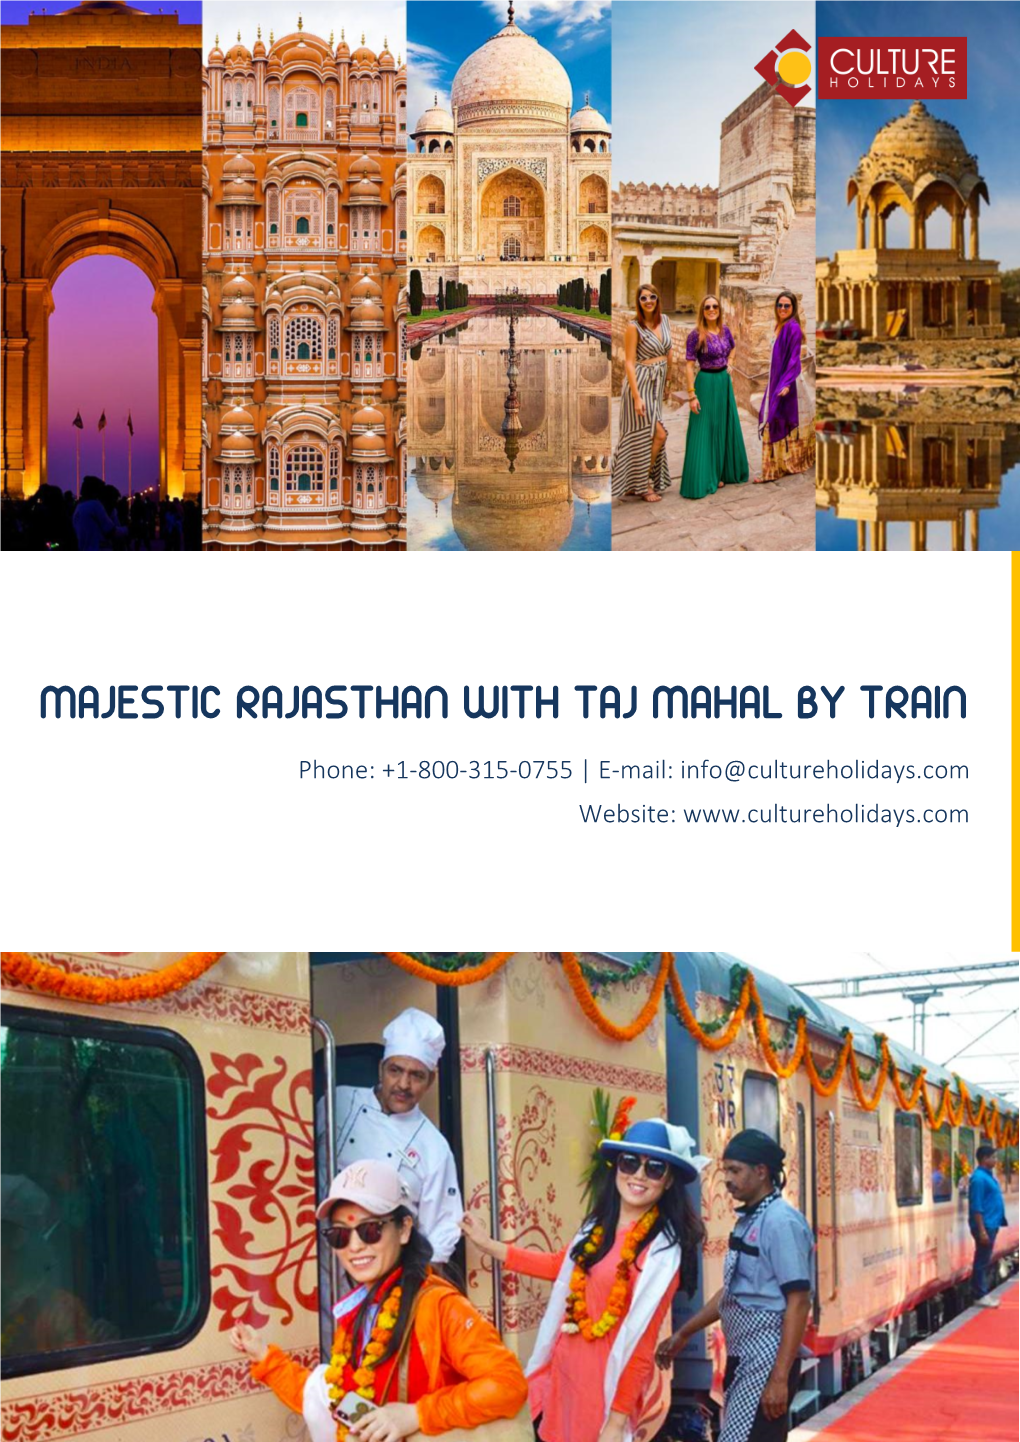 Majestic Rajasthan with Taj Mahal by Train